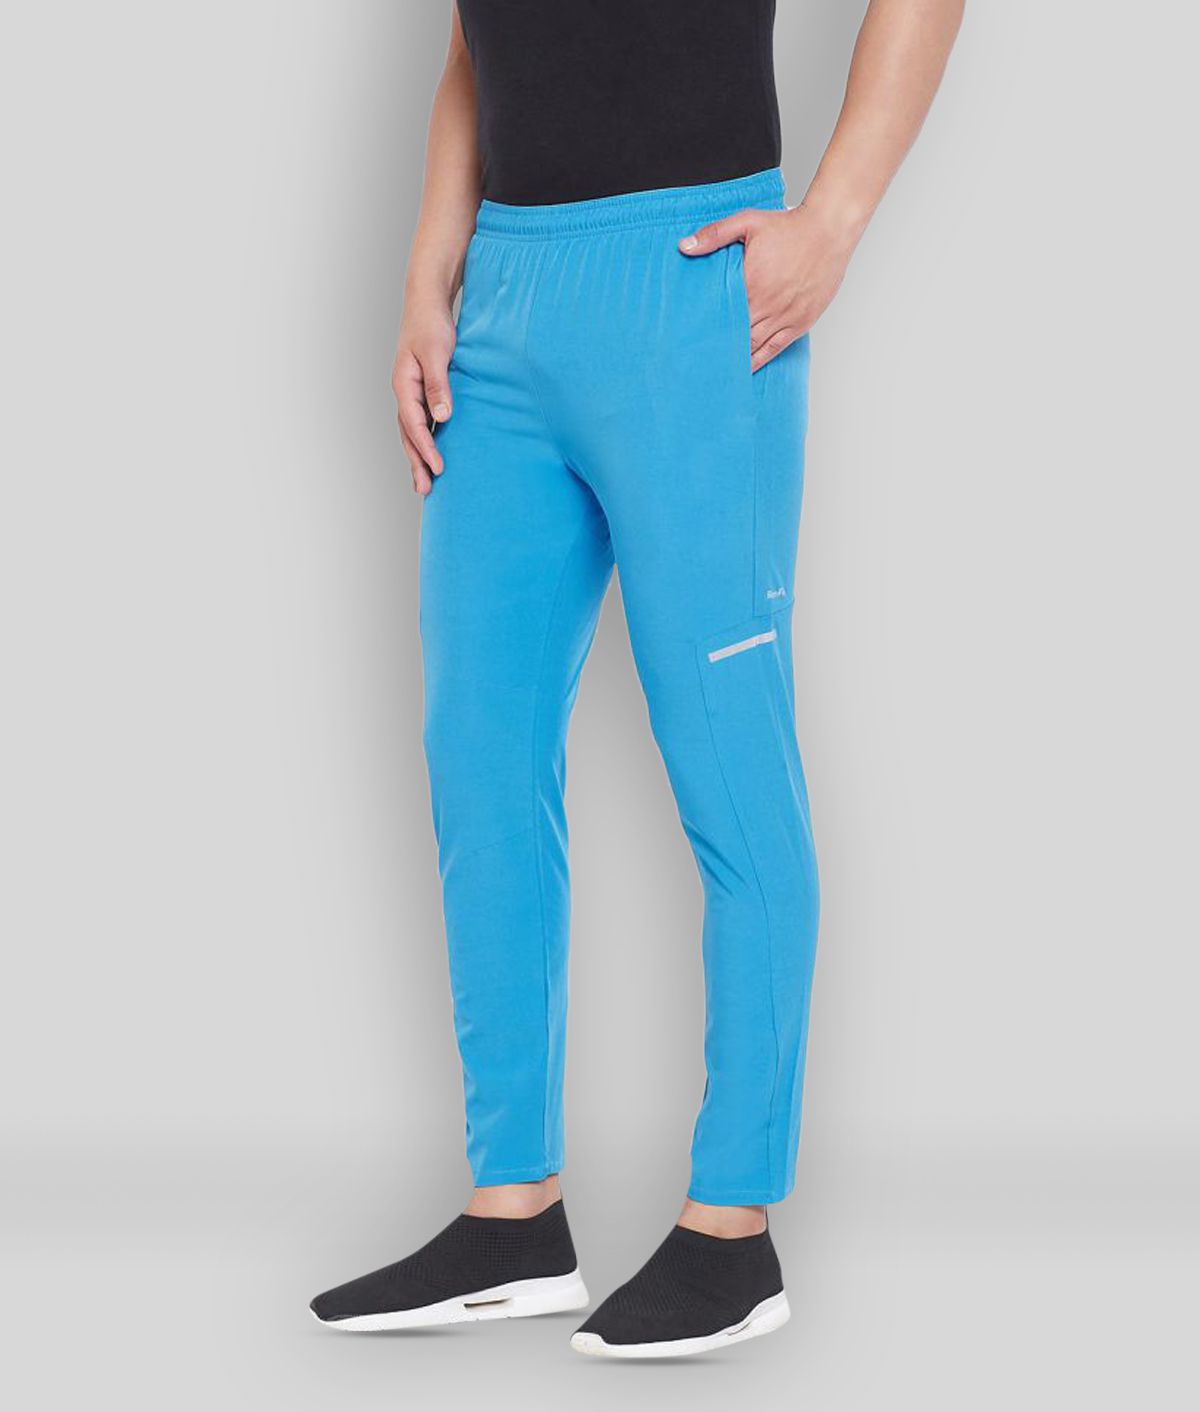 RANBOLT - Light Blue Polyester Men's Trackpants ( Pack of 1 )